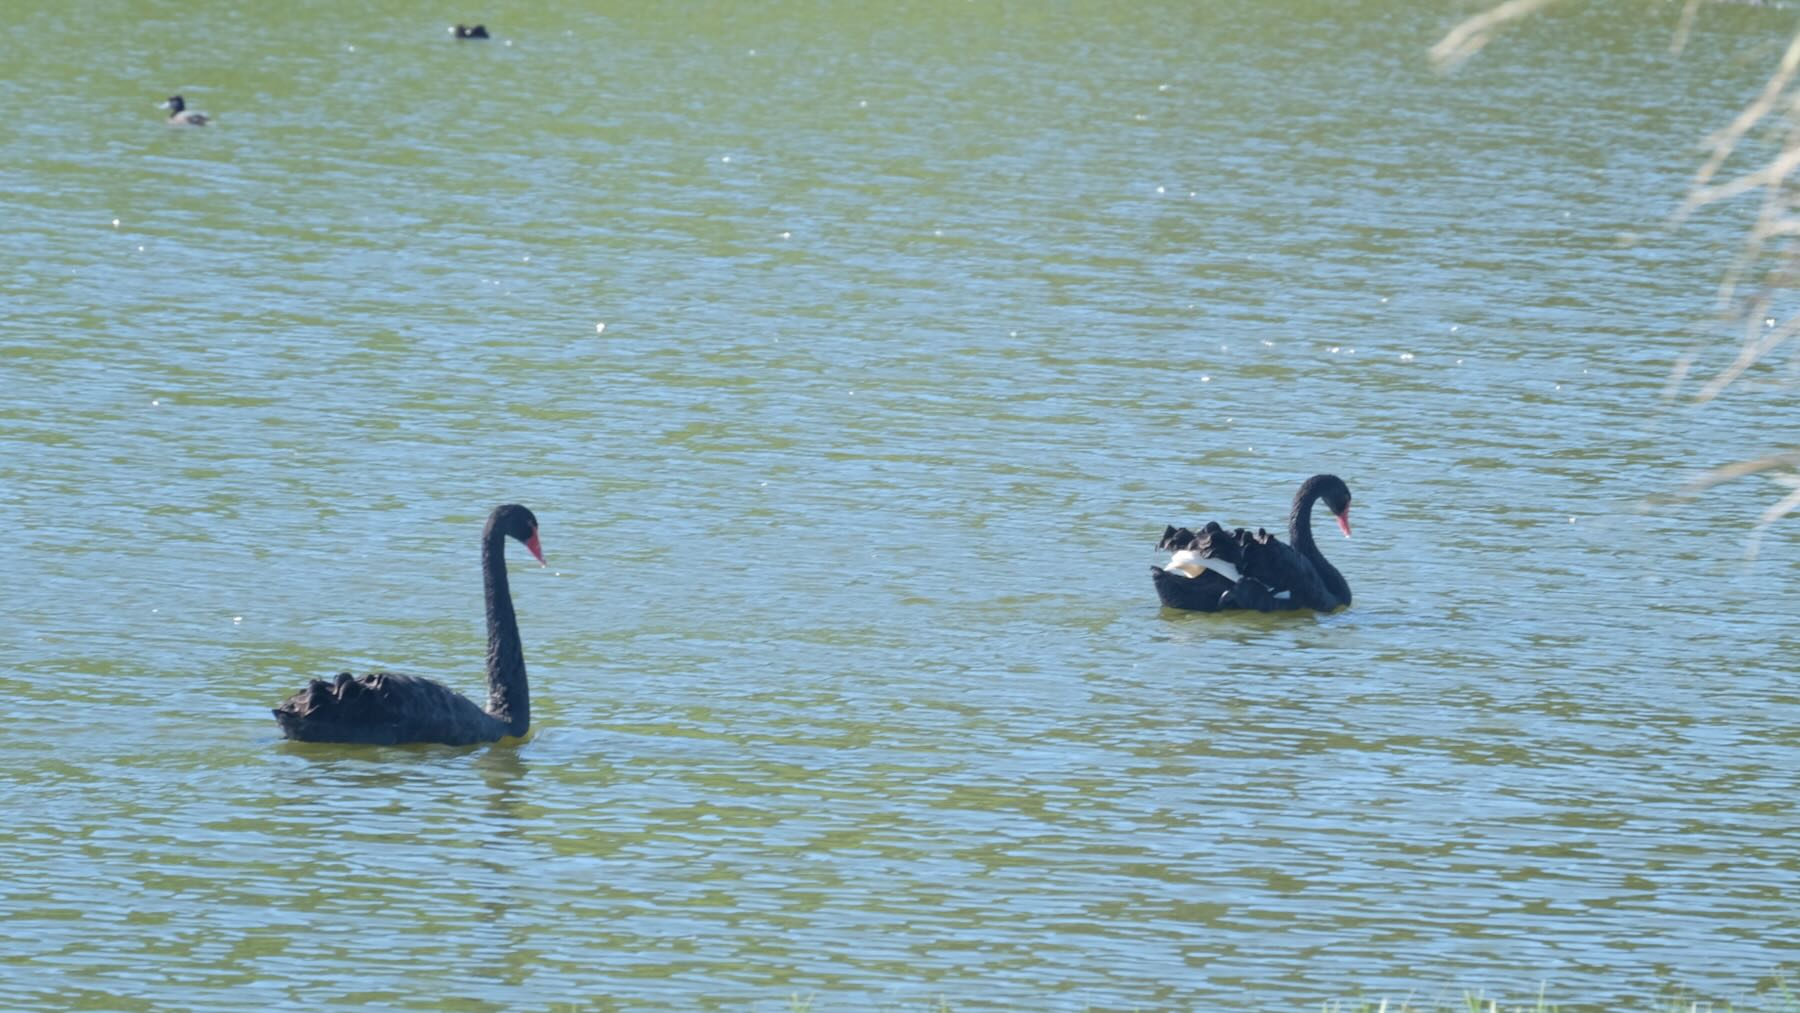 Two black swans on a lake. 